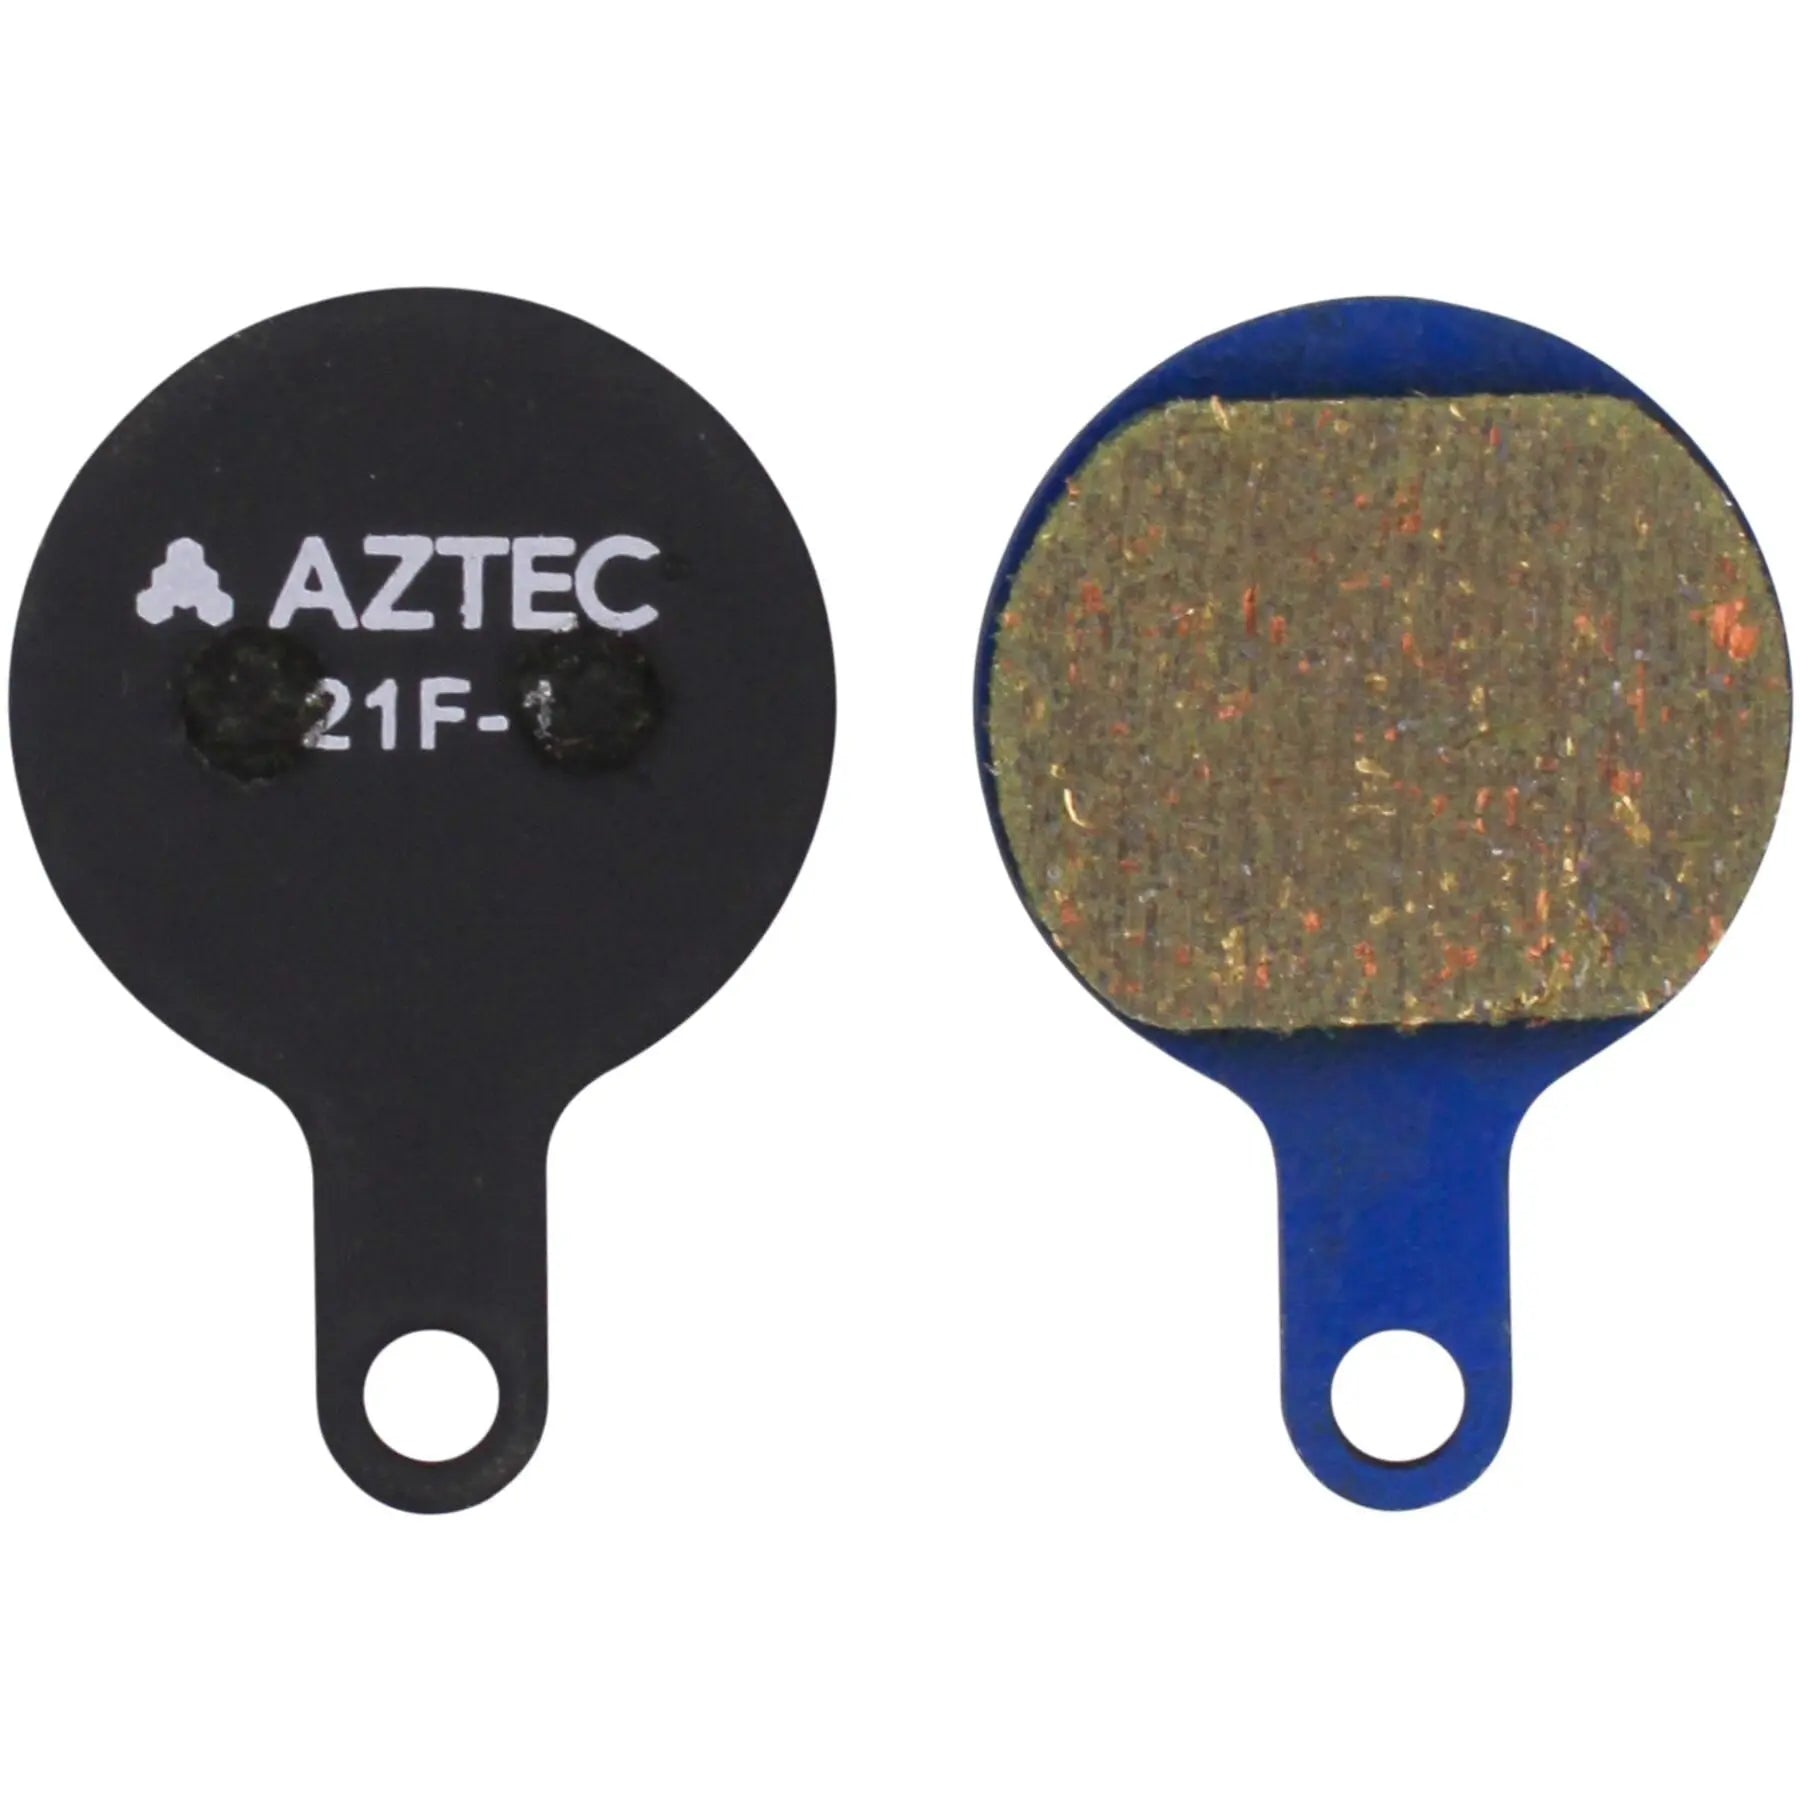 Aztec Organic disc brake pads for Tektro IOX mechanical callipers Aztec